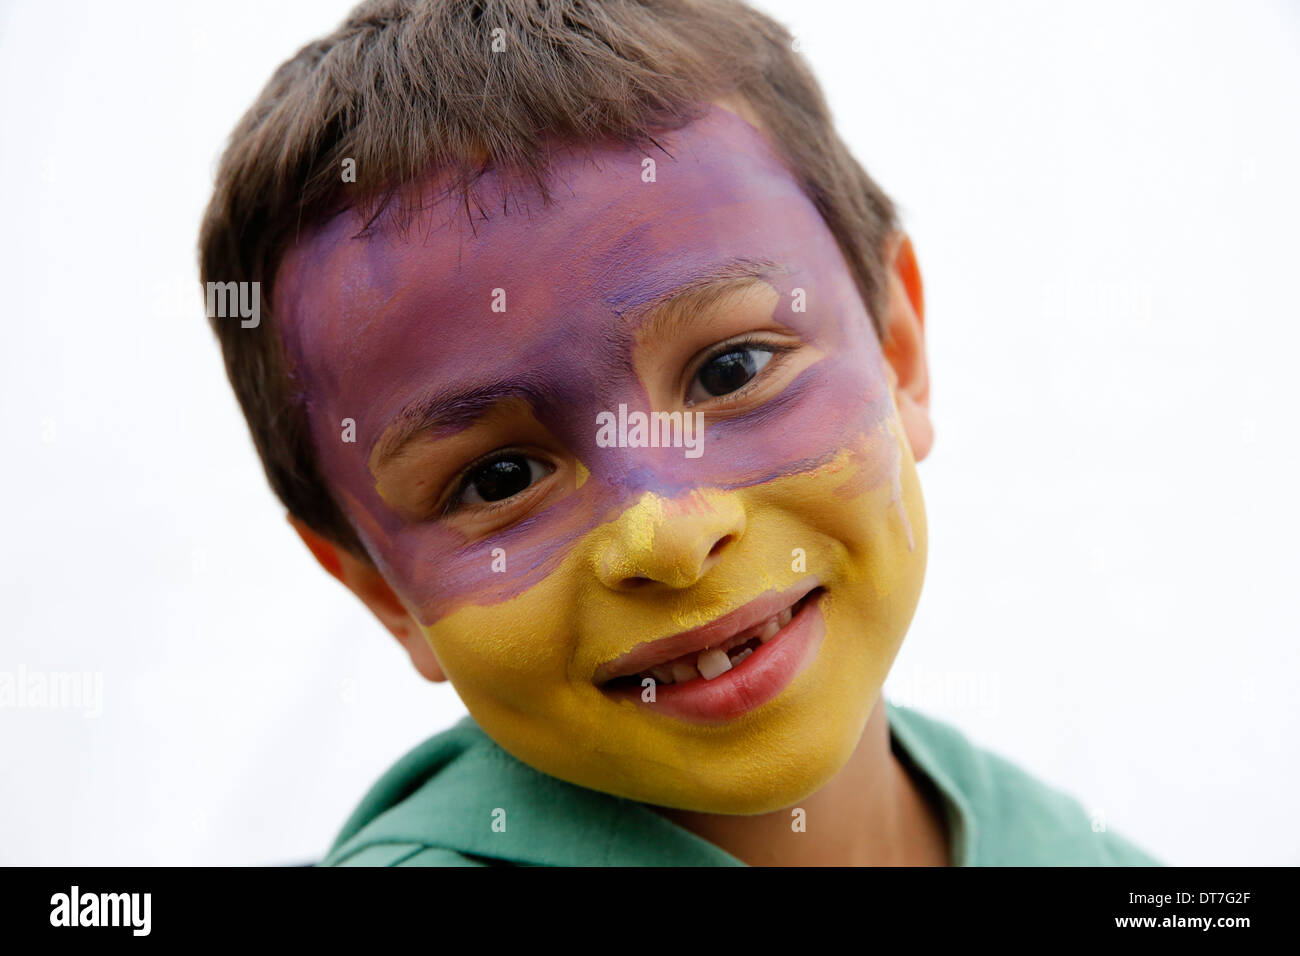 7-year-old boy wearing make-up Stock Photo